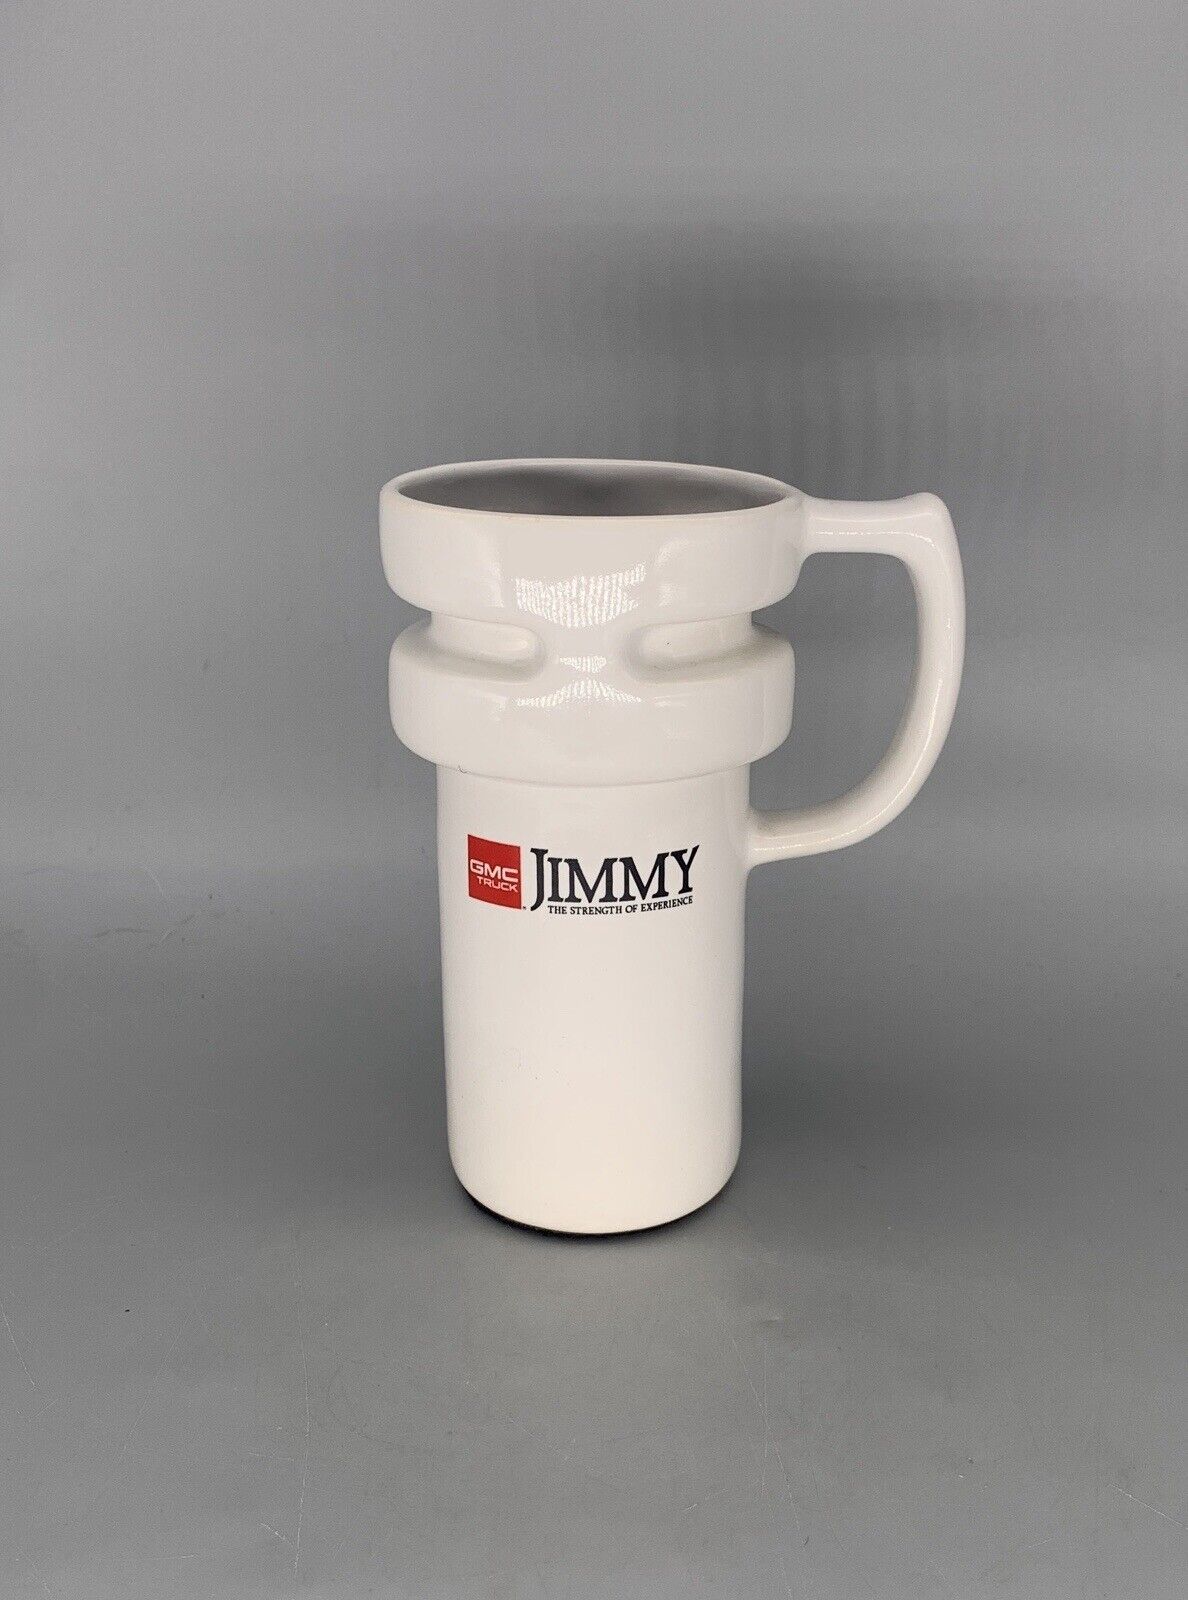 GMC Jimmy Travel Mug W/Lid Ceramic Vintage White Red 90s Non Slip Base USA RARE